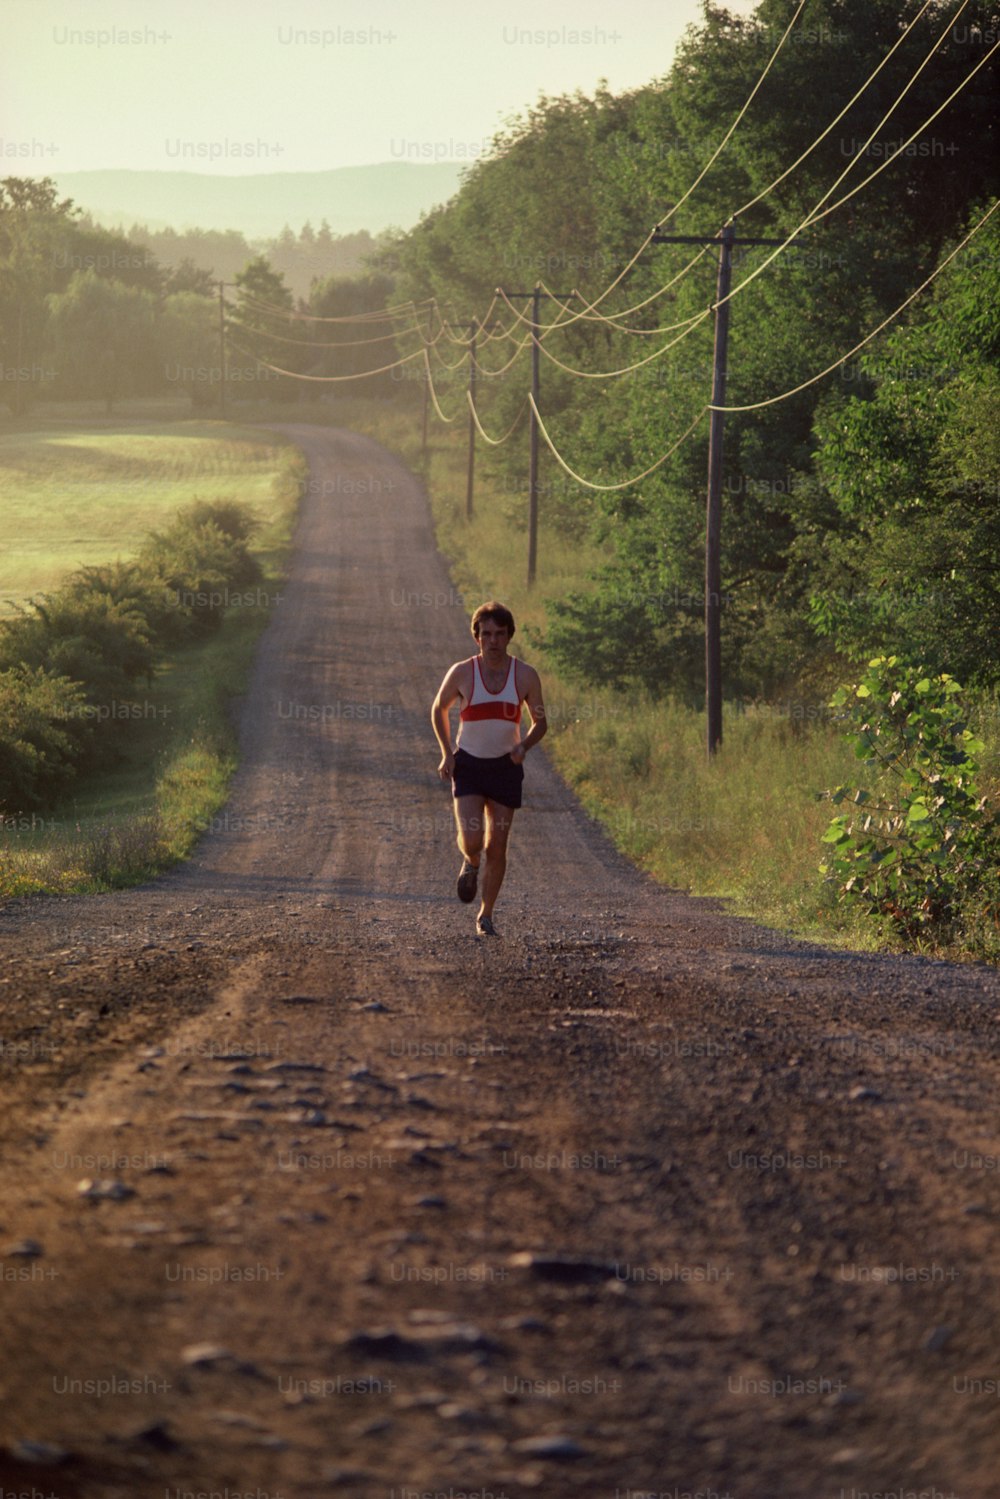 a man is running down a dirt road